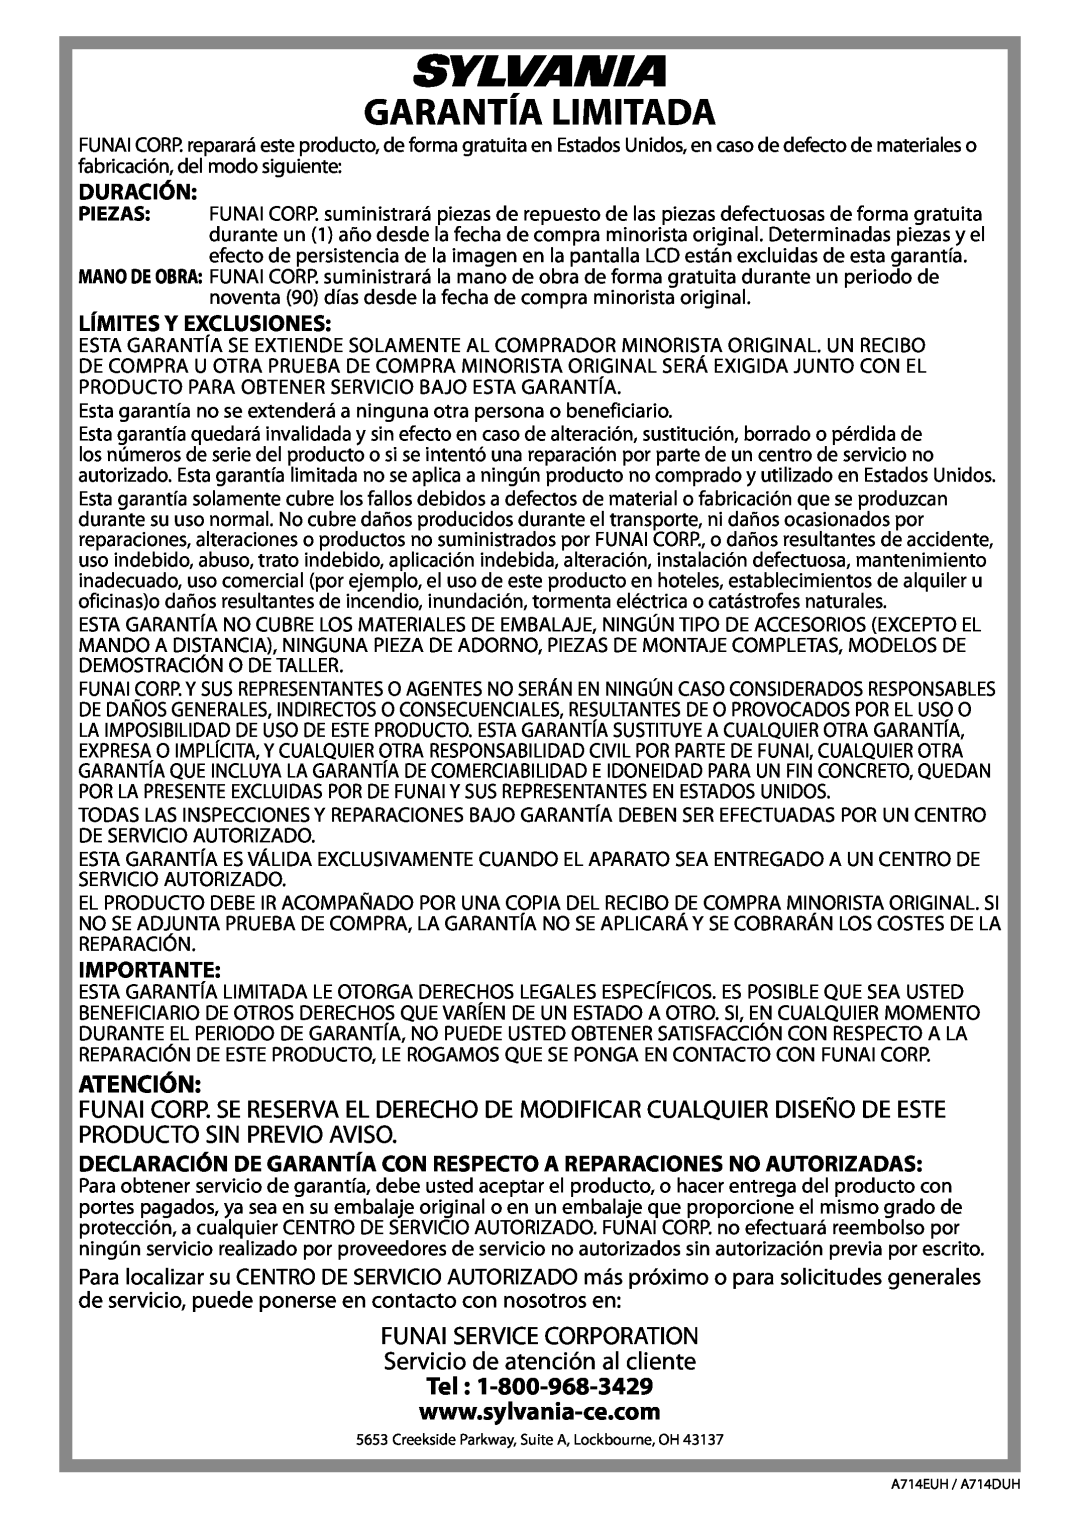 Sylvania LC200SL9 A Garantía Limitada, Atención, FUNAI SERVICE CORPORATION Servicio de atención al cliente, Duración 